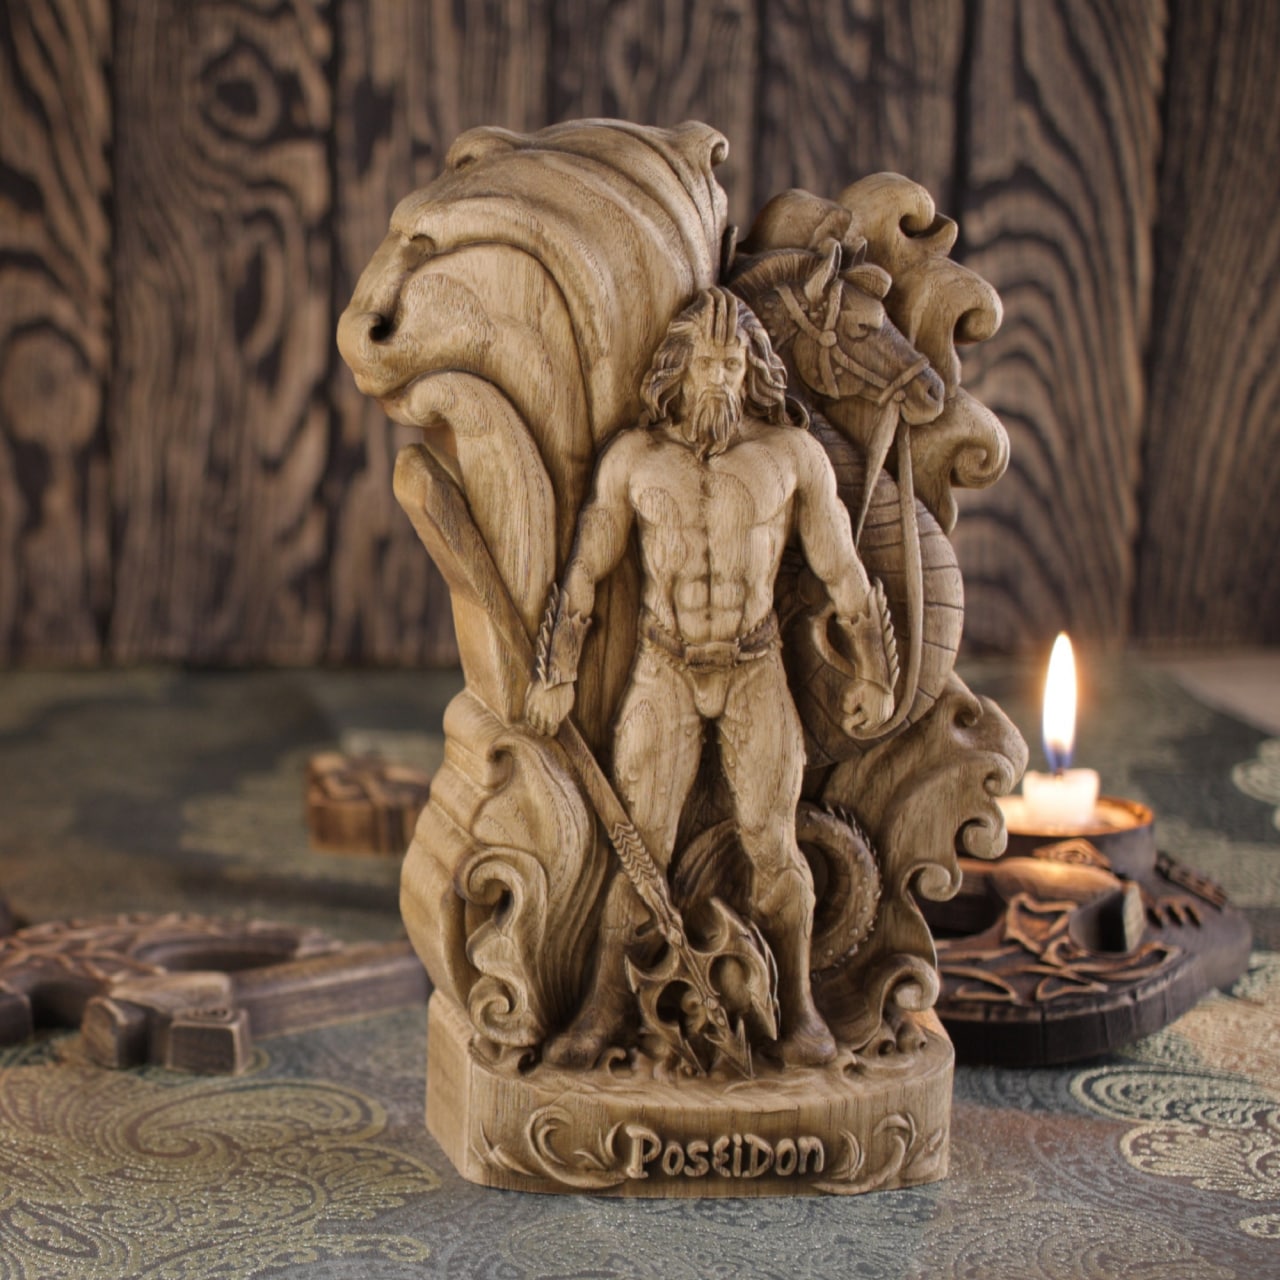 Poseidon Sculpture - The Sea Greek God Statue